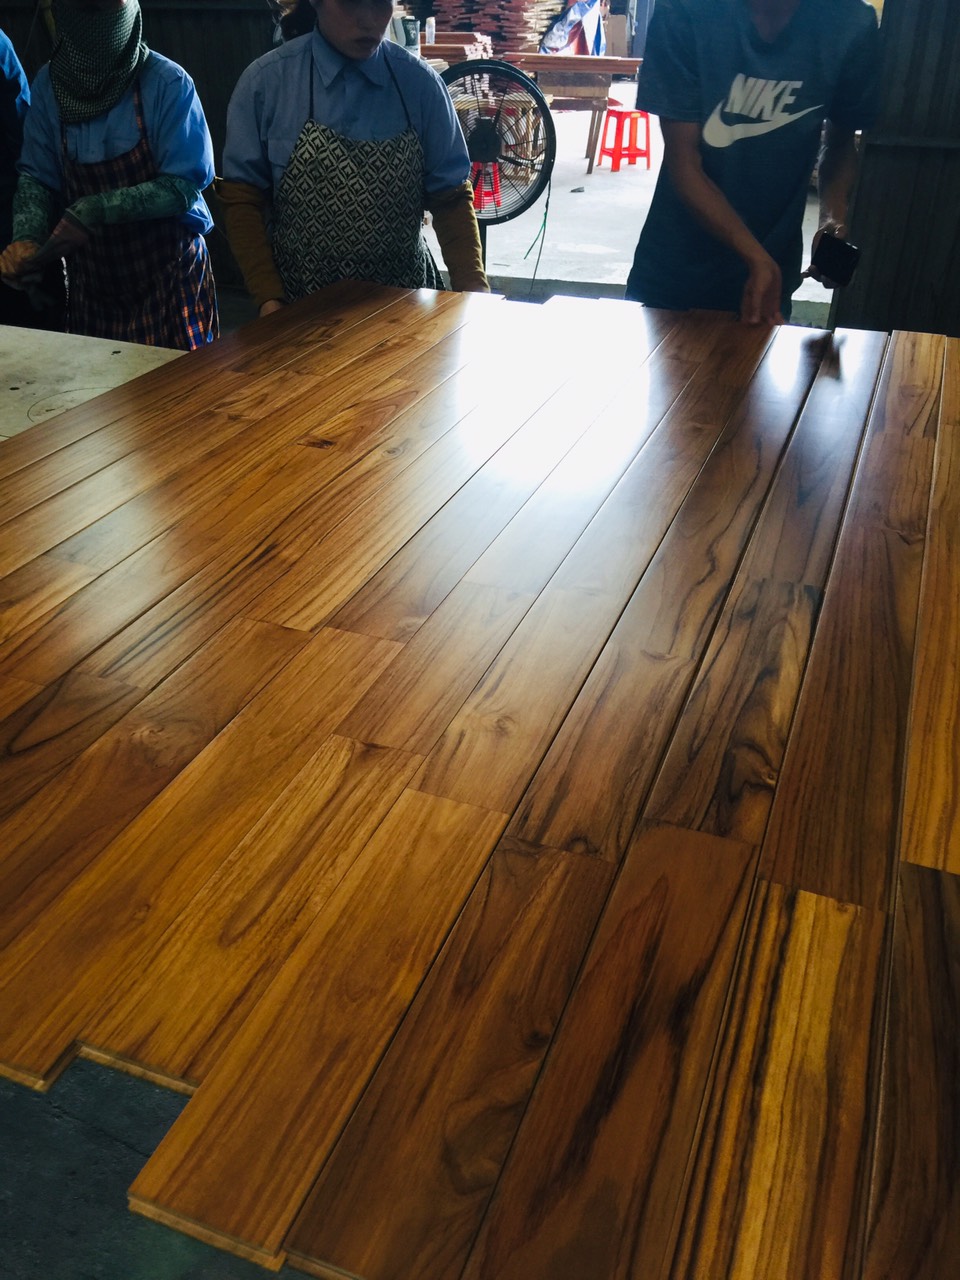 ván sàn gỗ teak